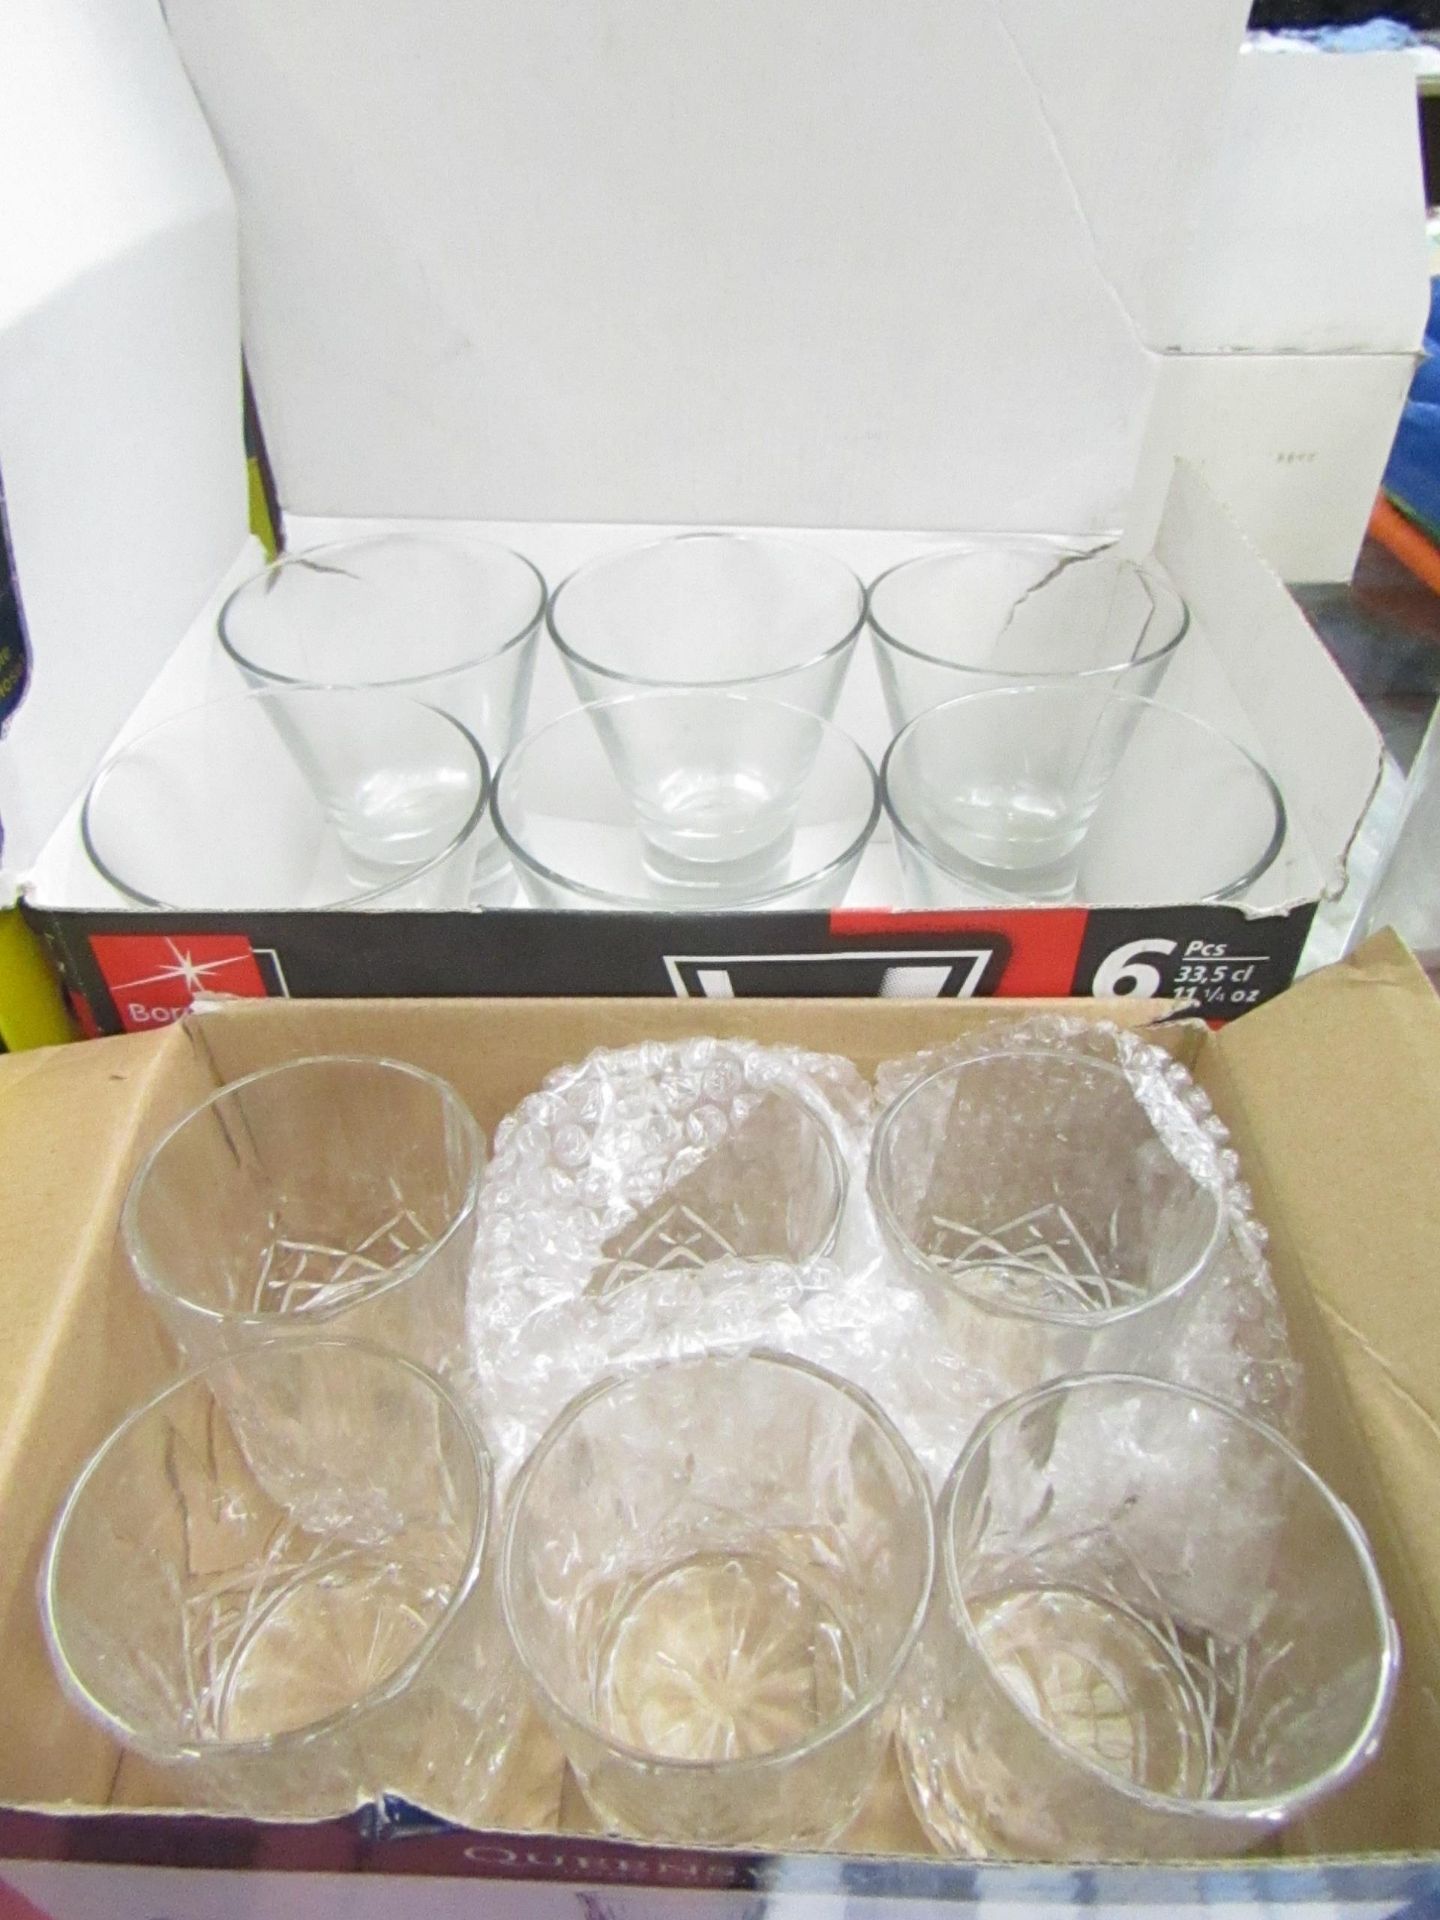 1 x Bormioli 6 piece 33cl Glass Set boxed & 1 x Queensway 6 piece Whiskey Tumbler set boxed (no